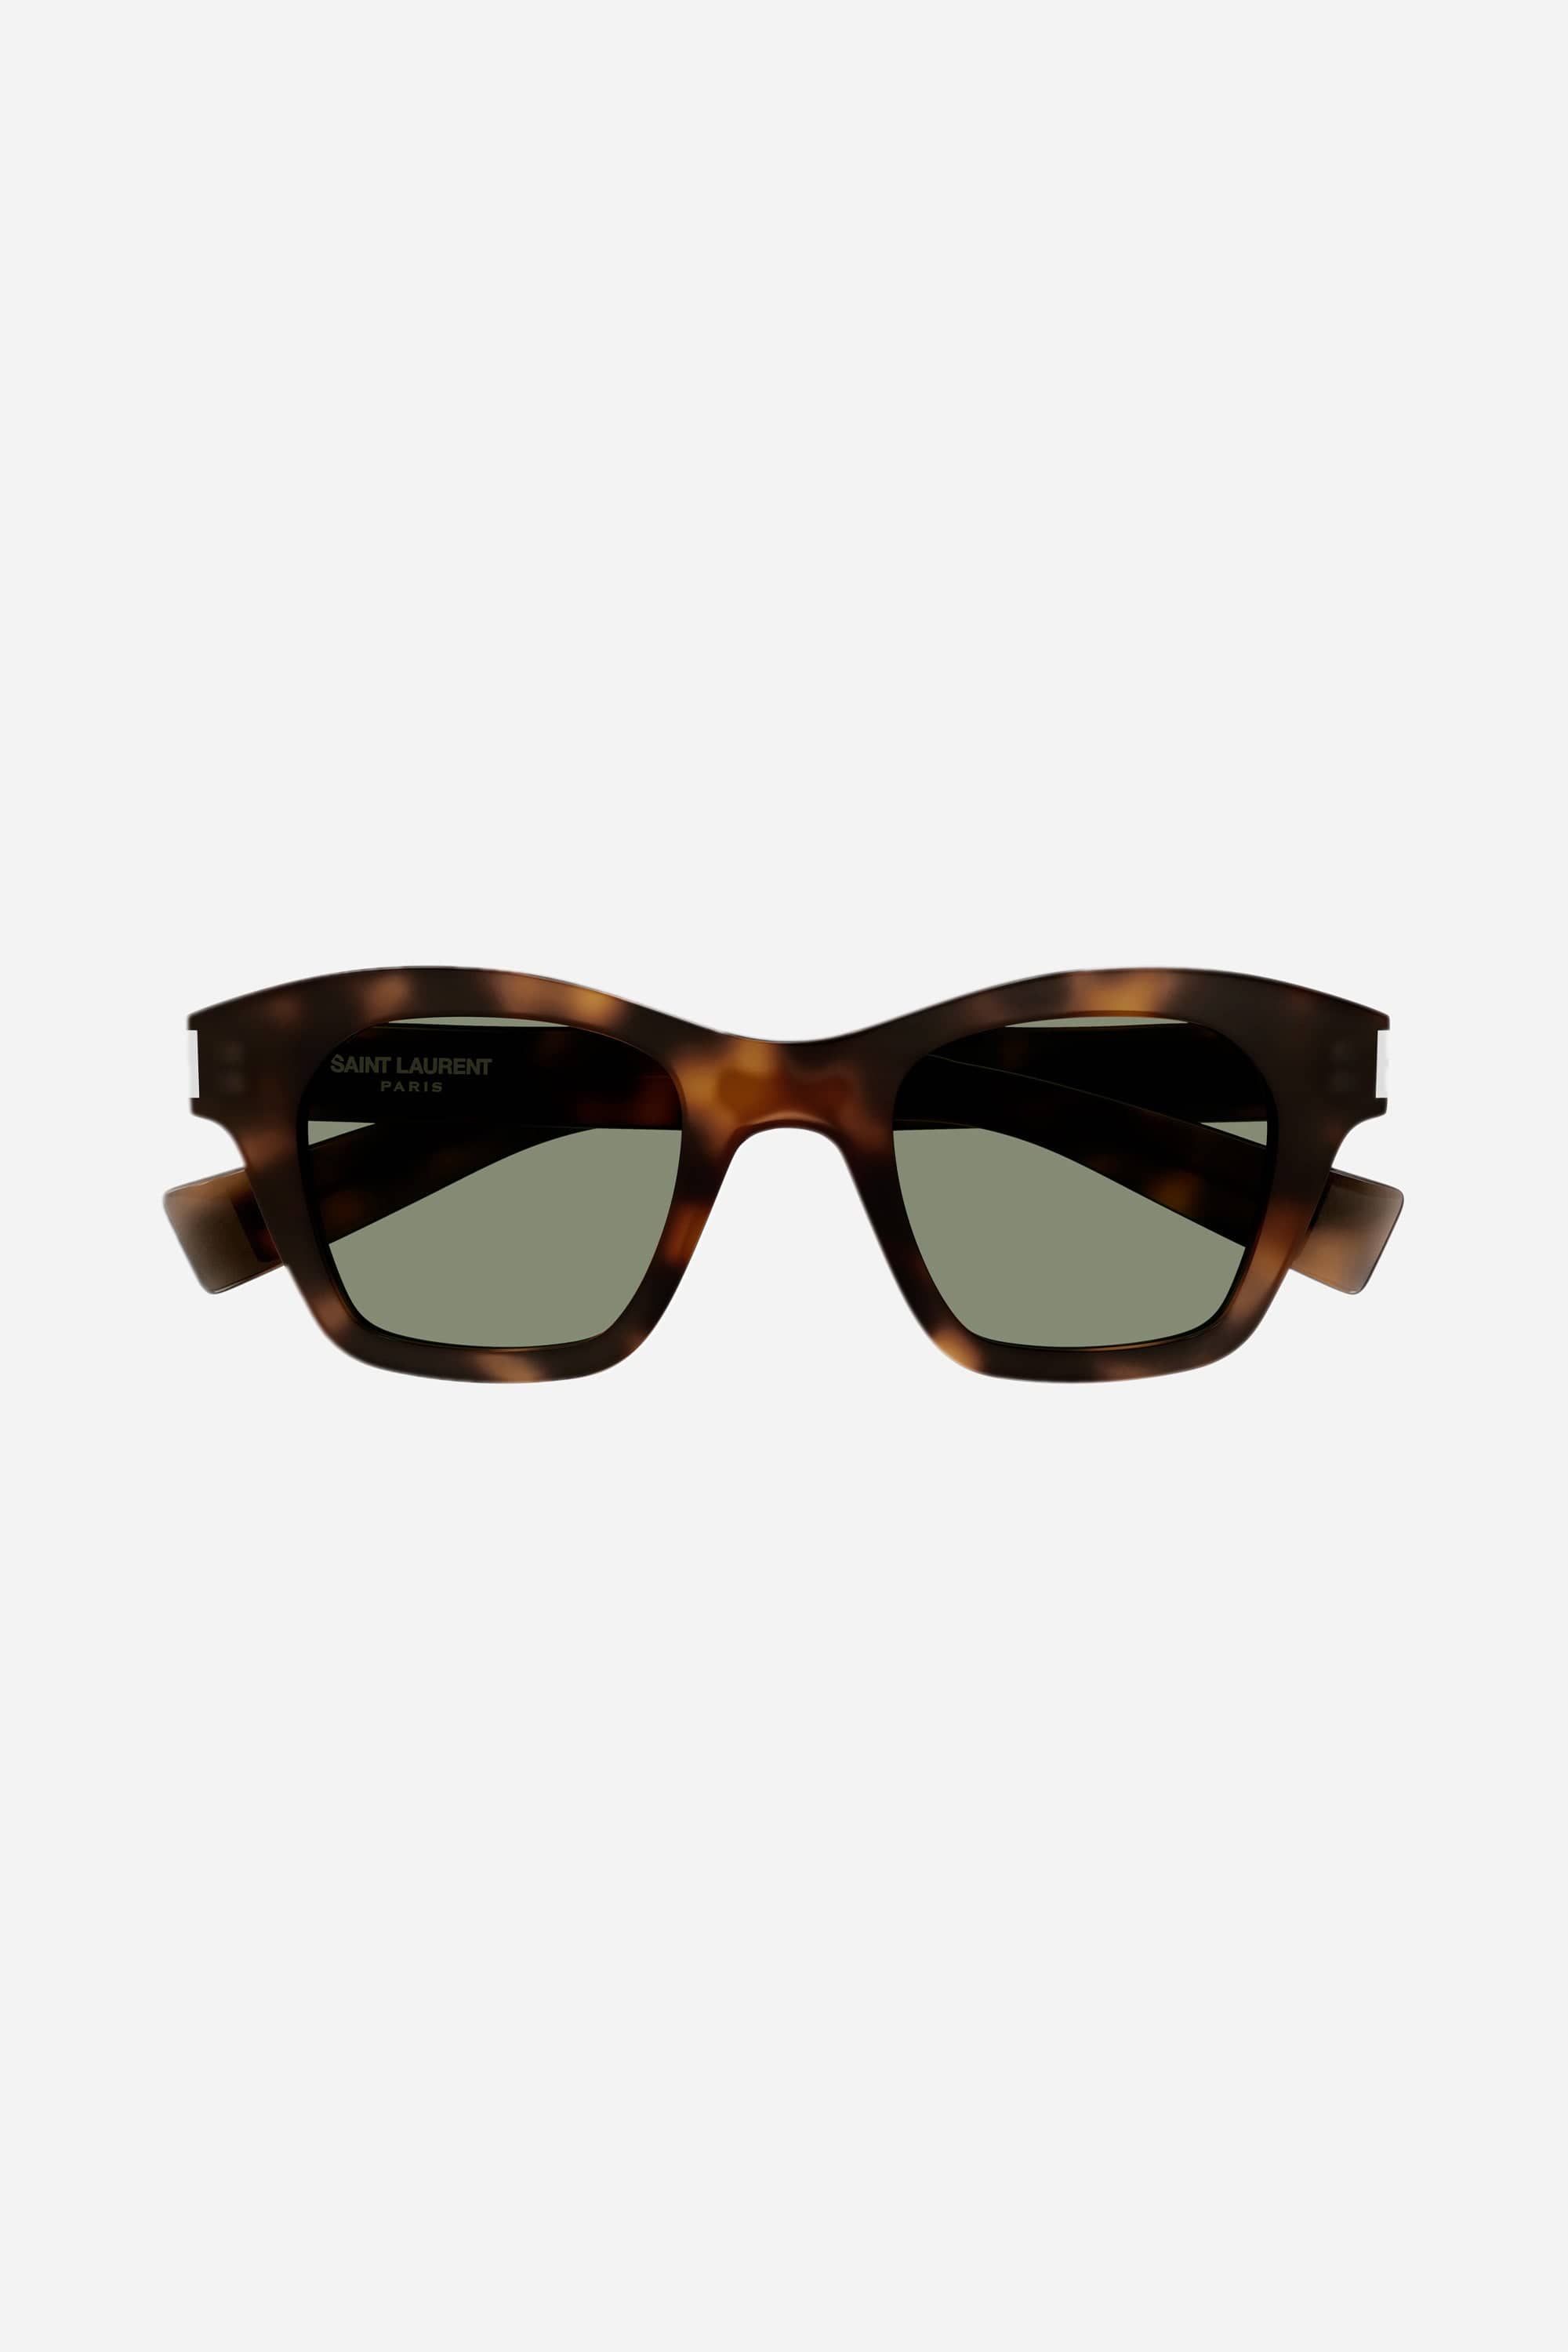 Saint Laurent bold cat-eye havana sunglasses - Eyewear Club